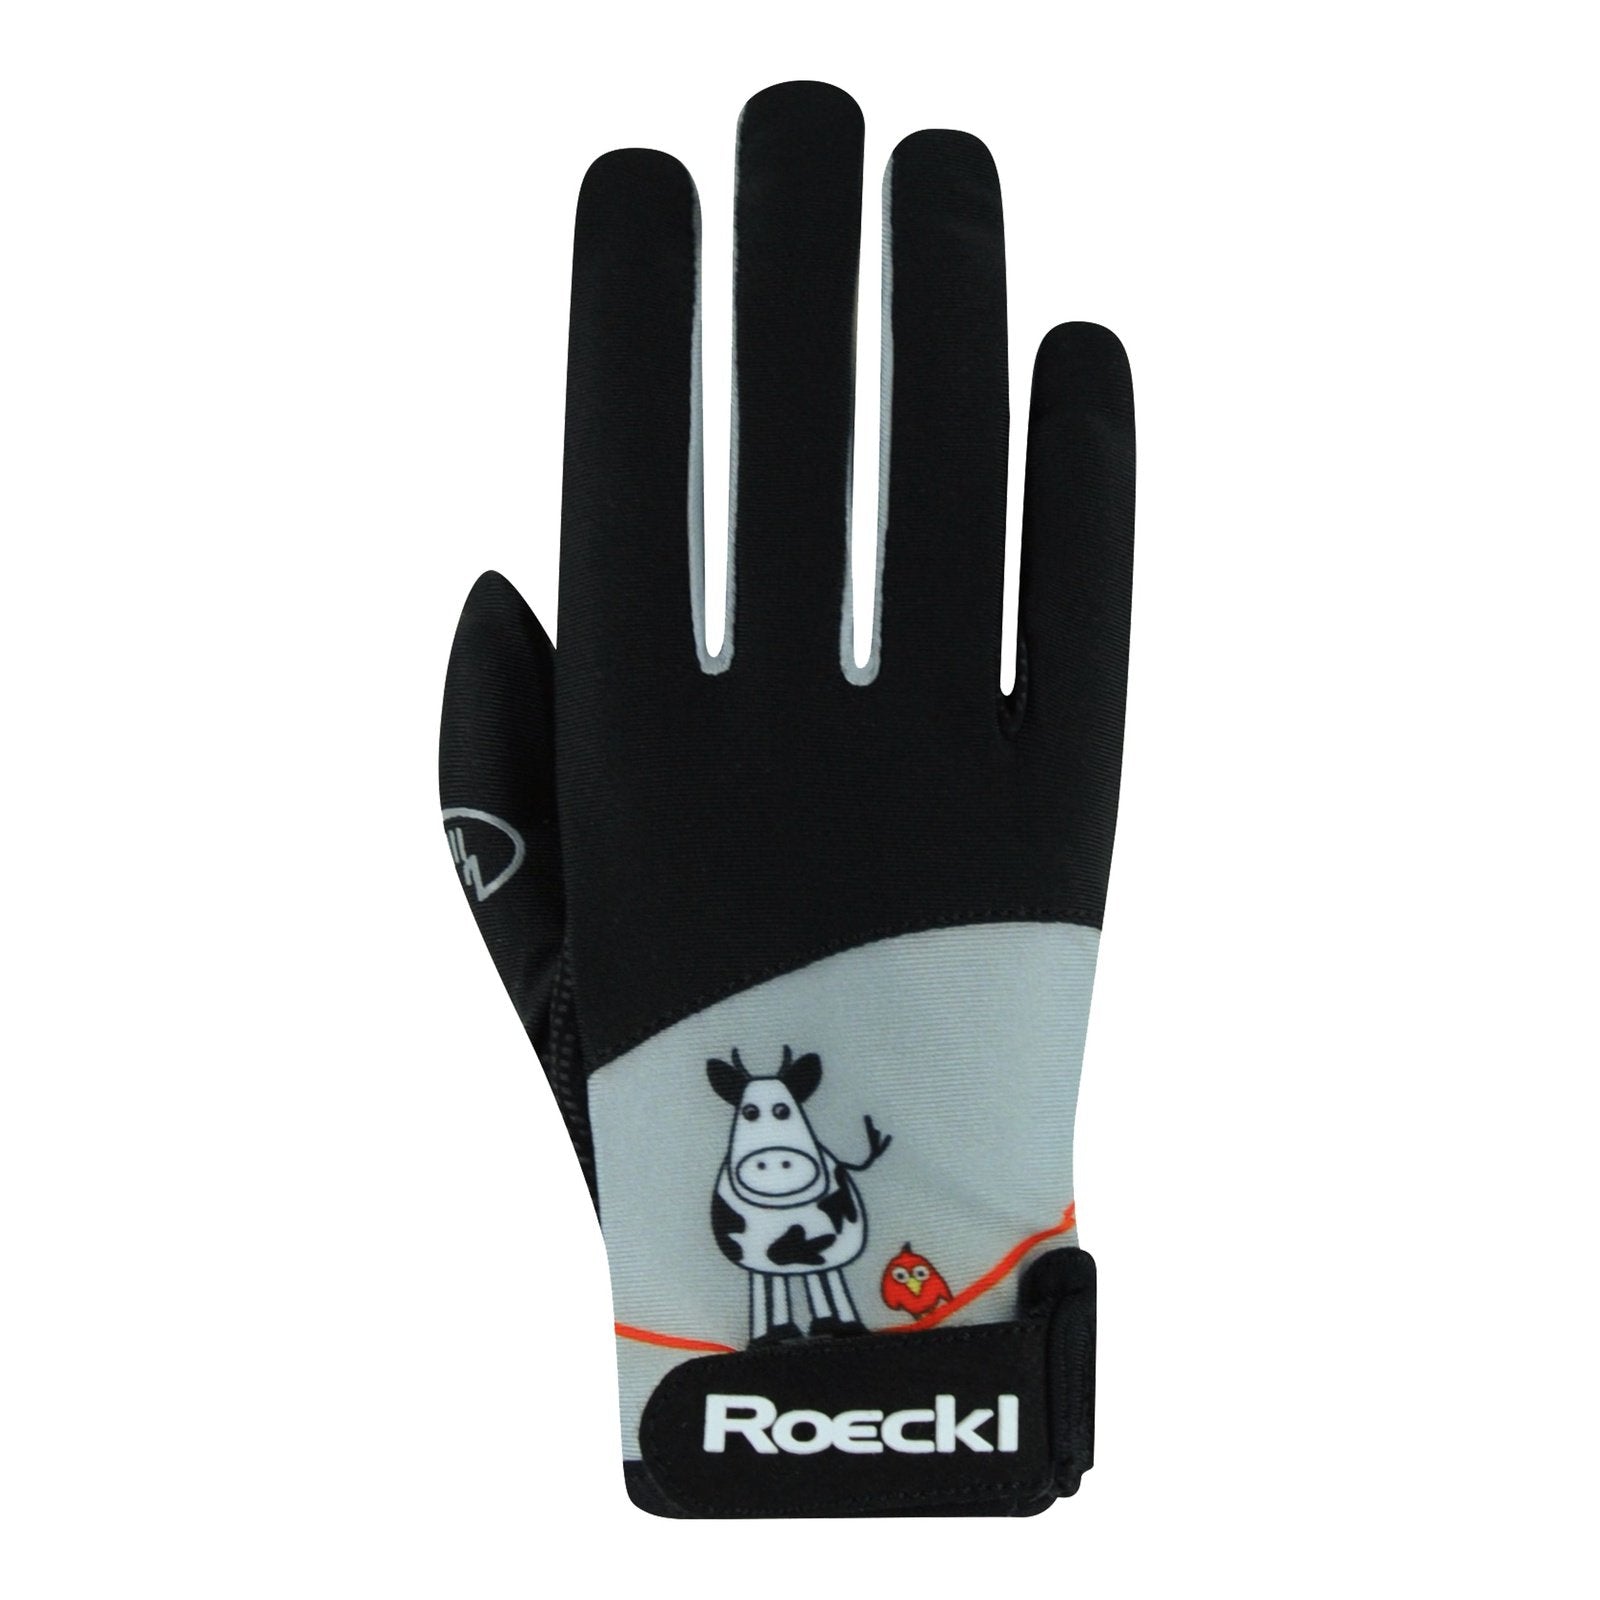 Roeckl Handschuhe Kansas bei SP-Reitsport